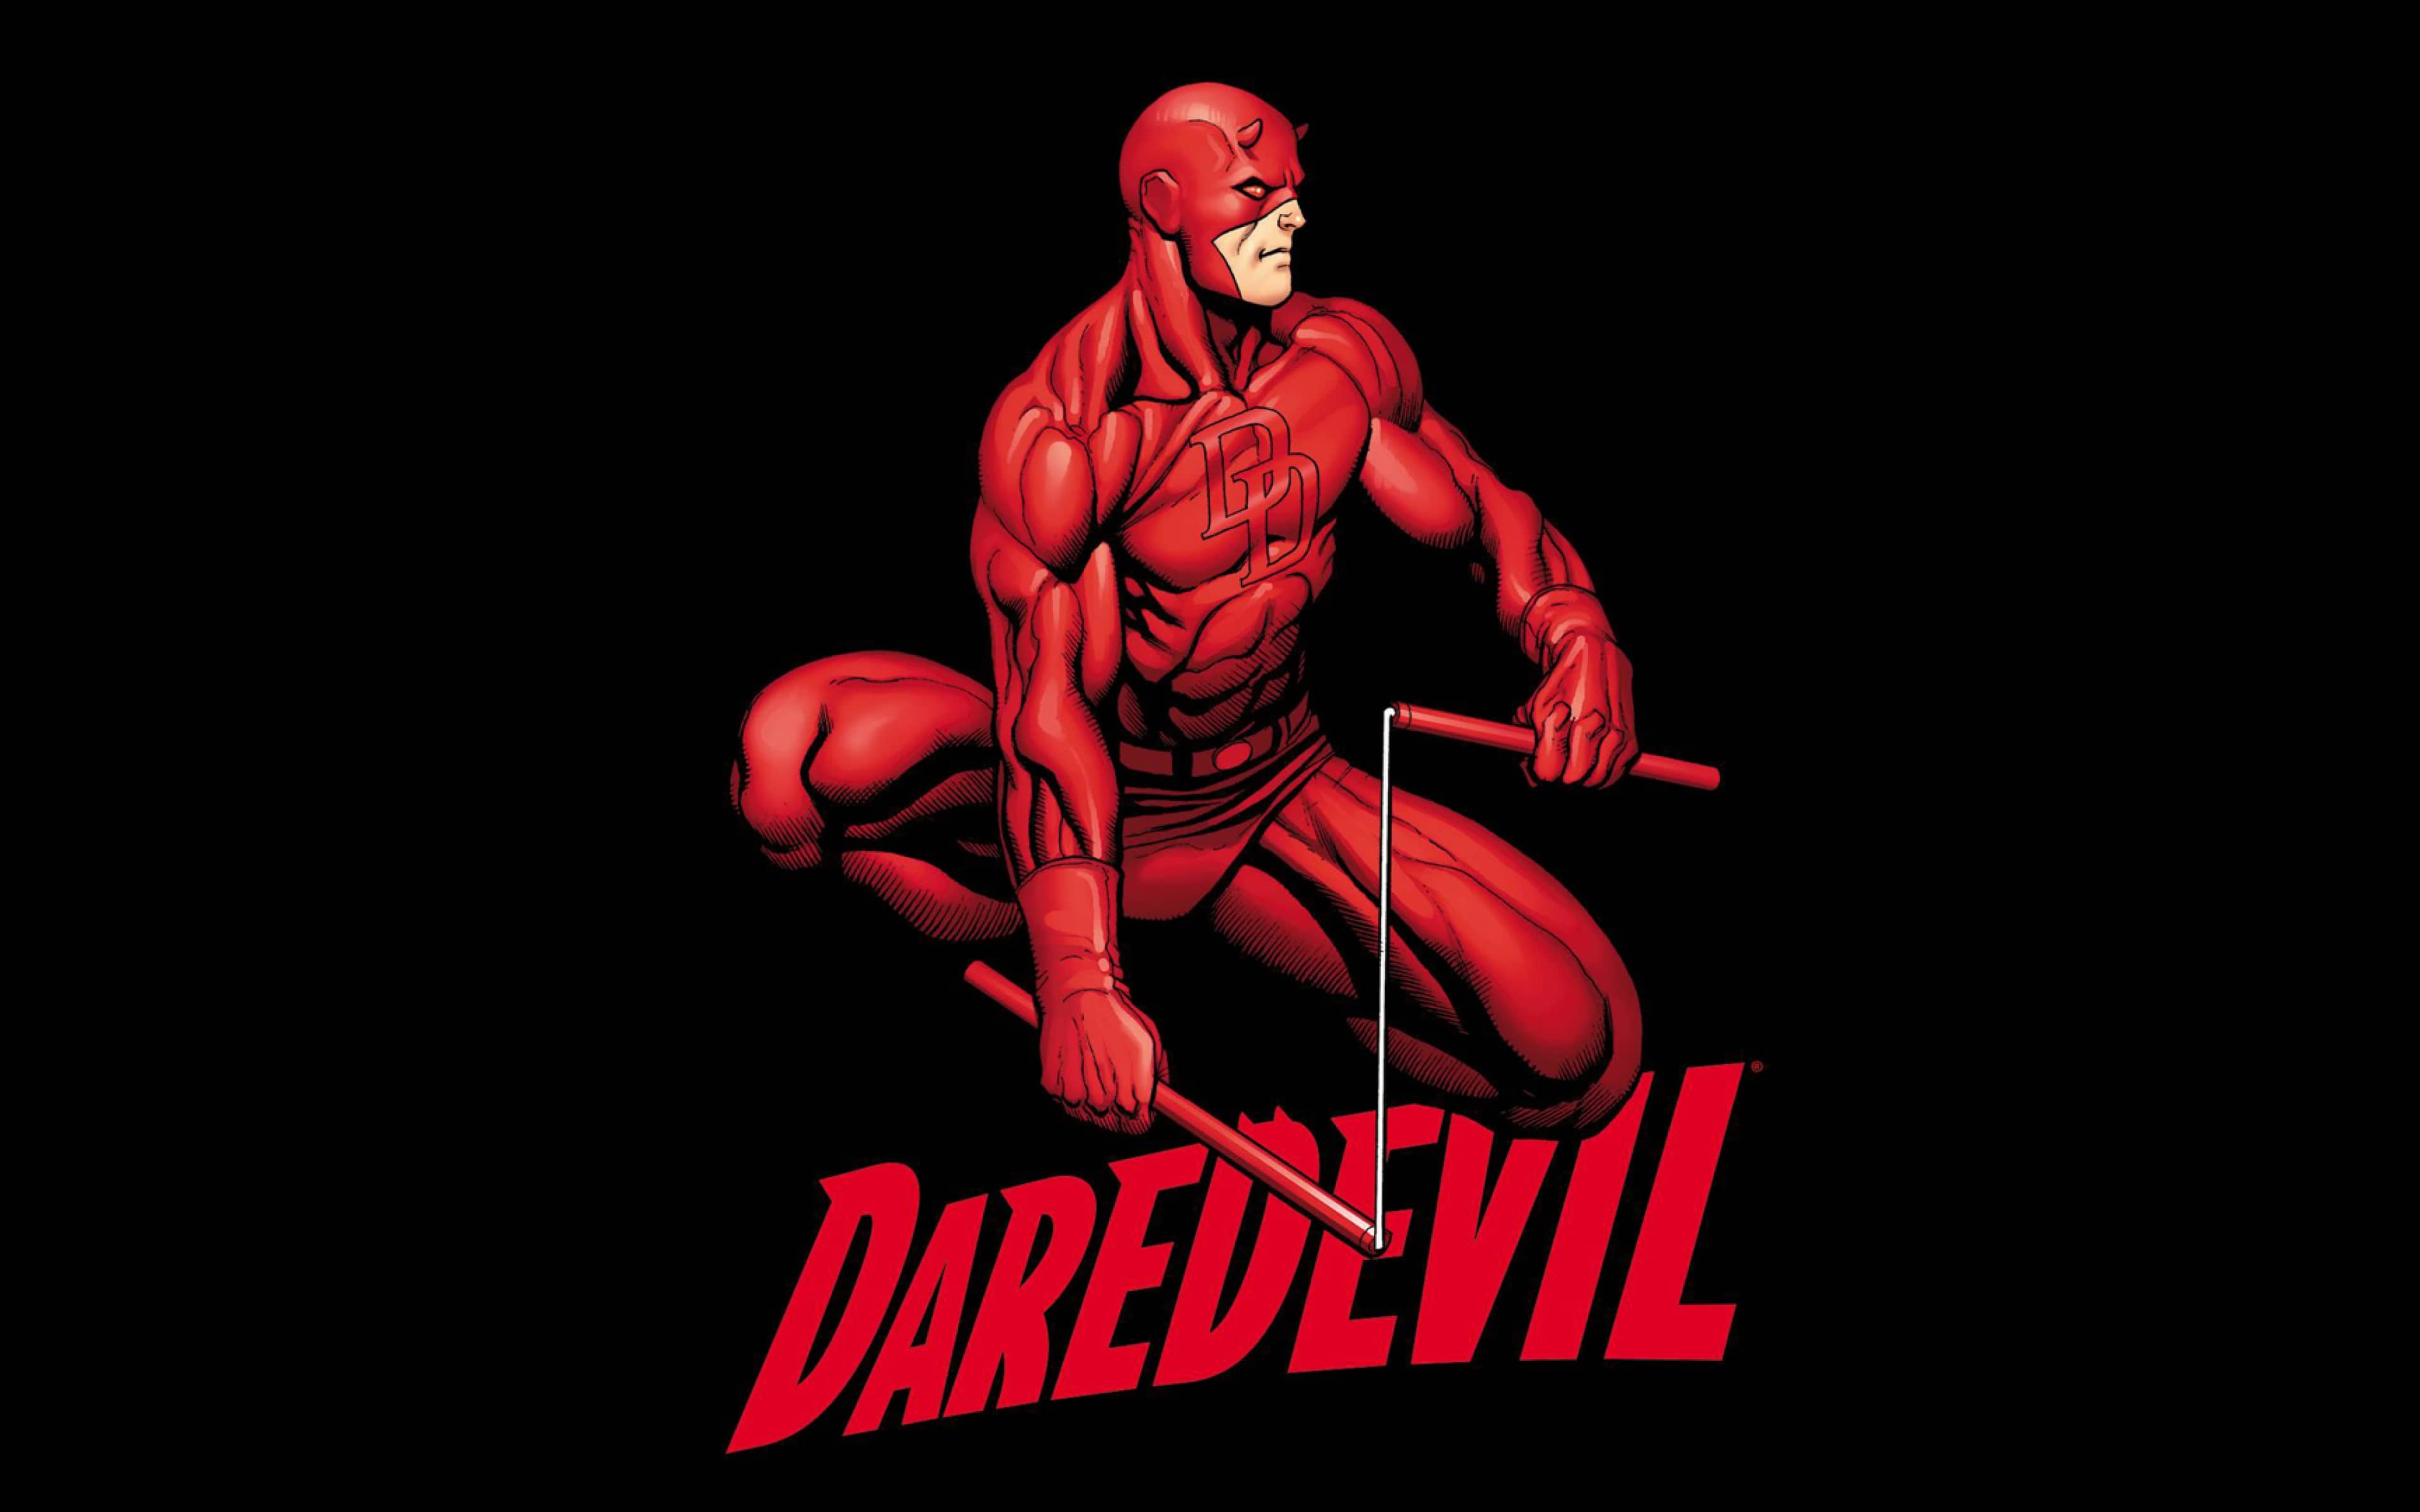 Daredevil Marvel Superhero Comics Wallpaper and Free Stock